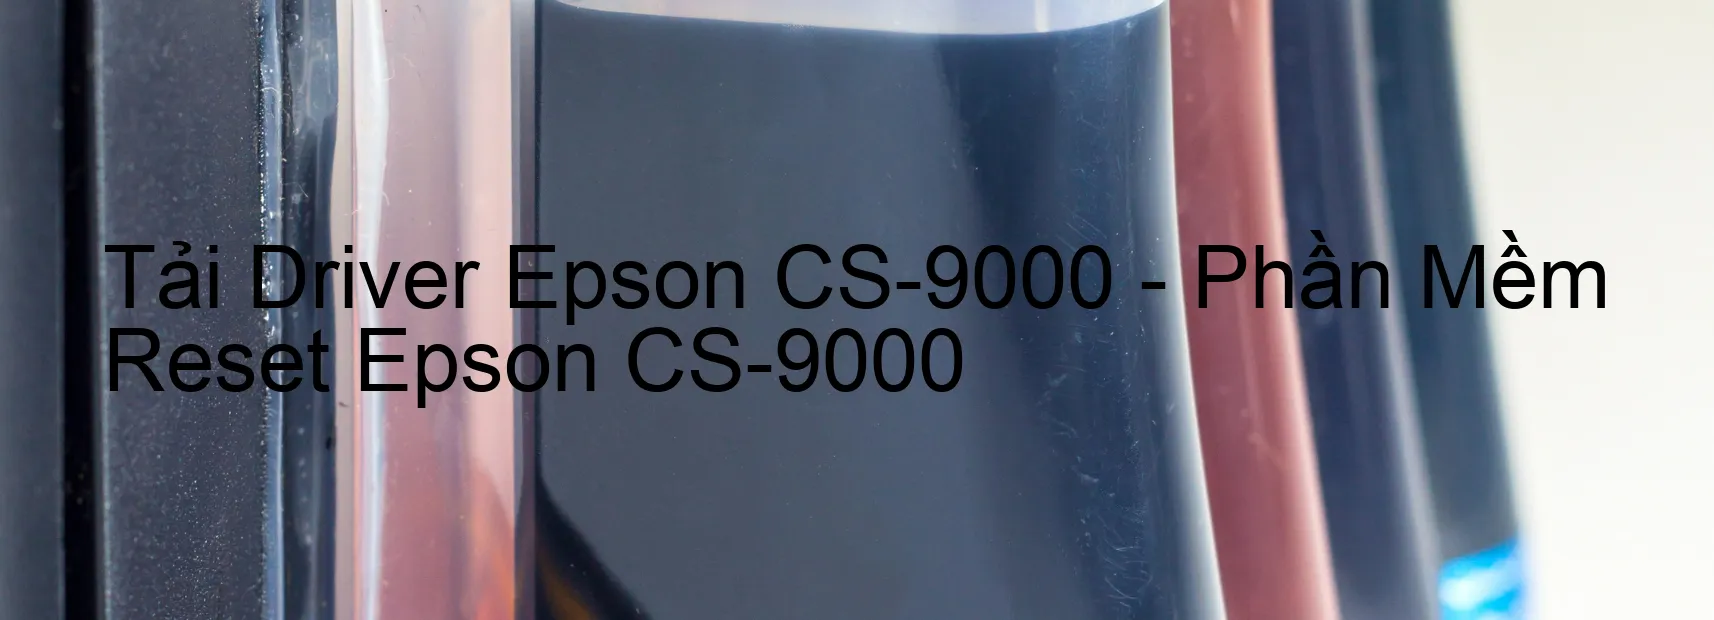 Driver Epson CS-9000, Phần Mềm Reset Epson CS-9000